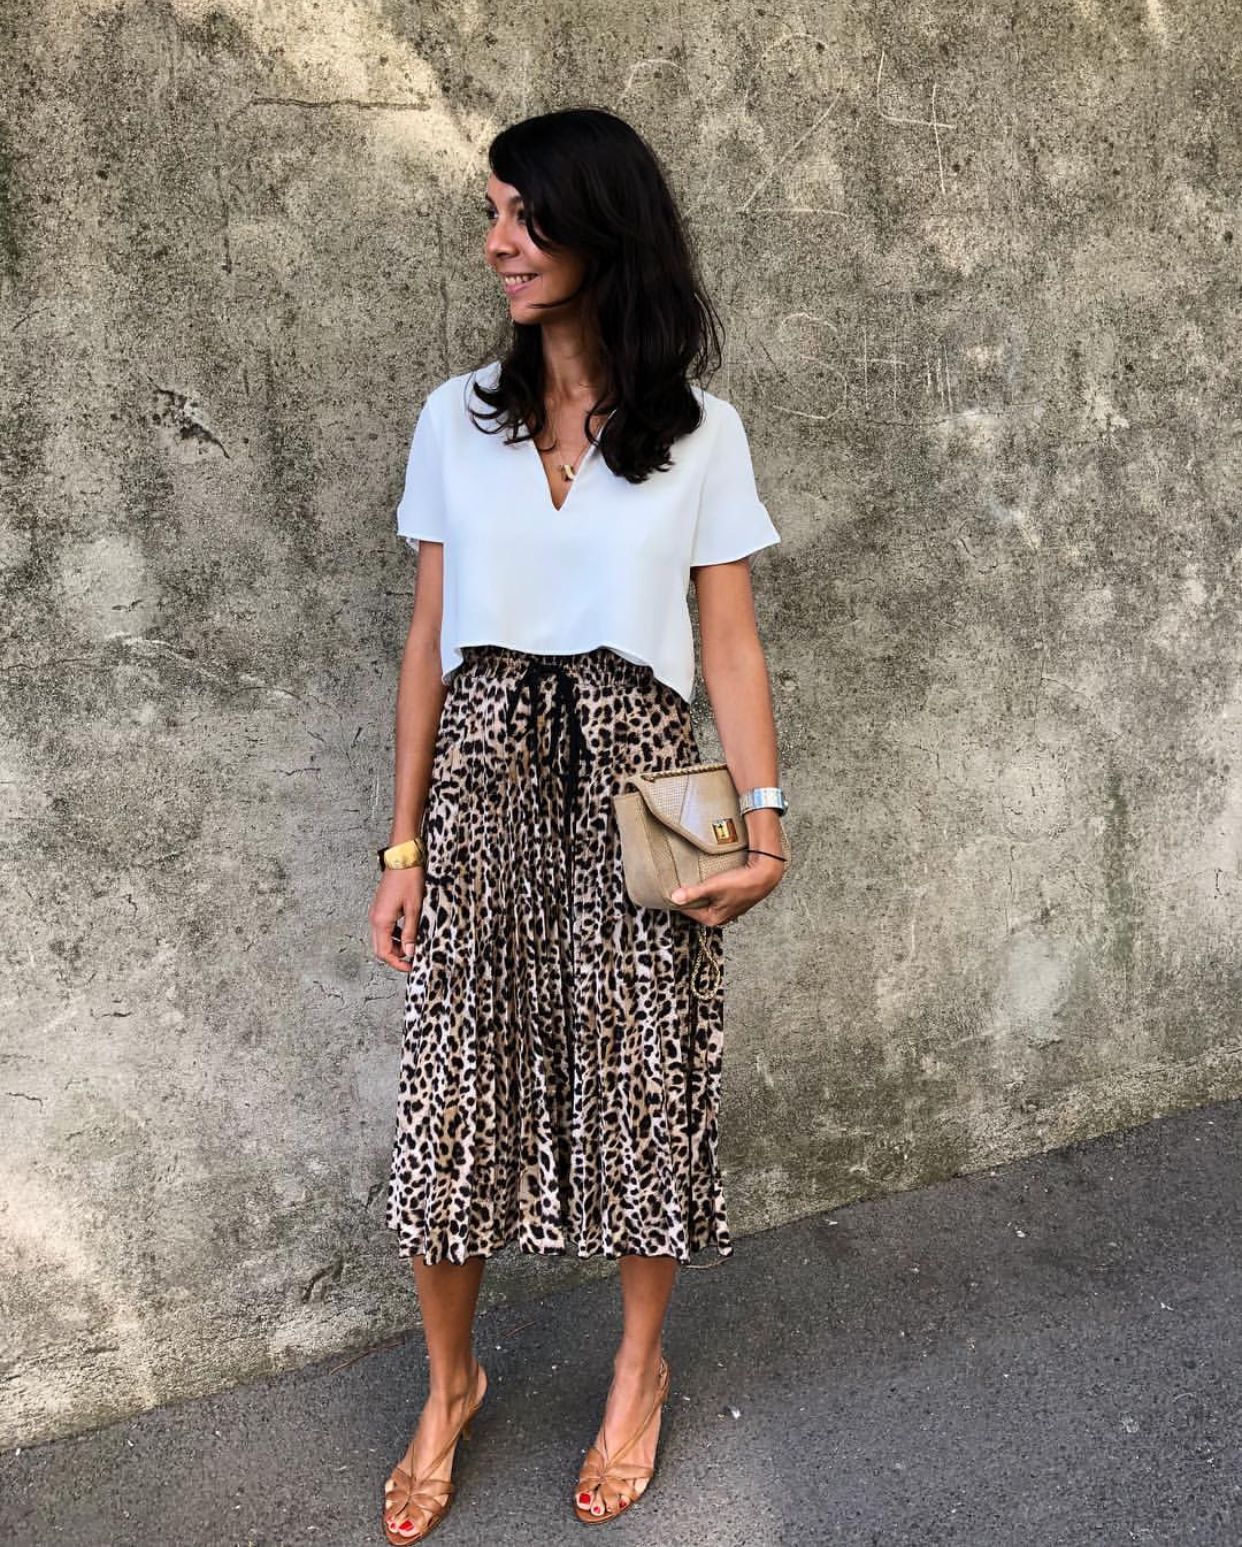 Leopard Print Skirt Outfit Ideas